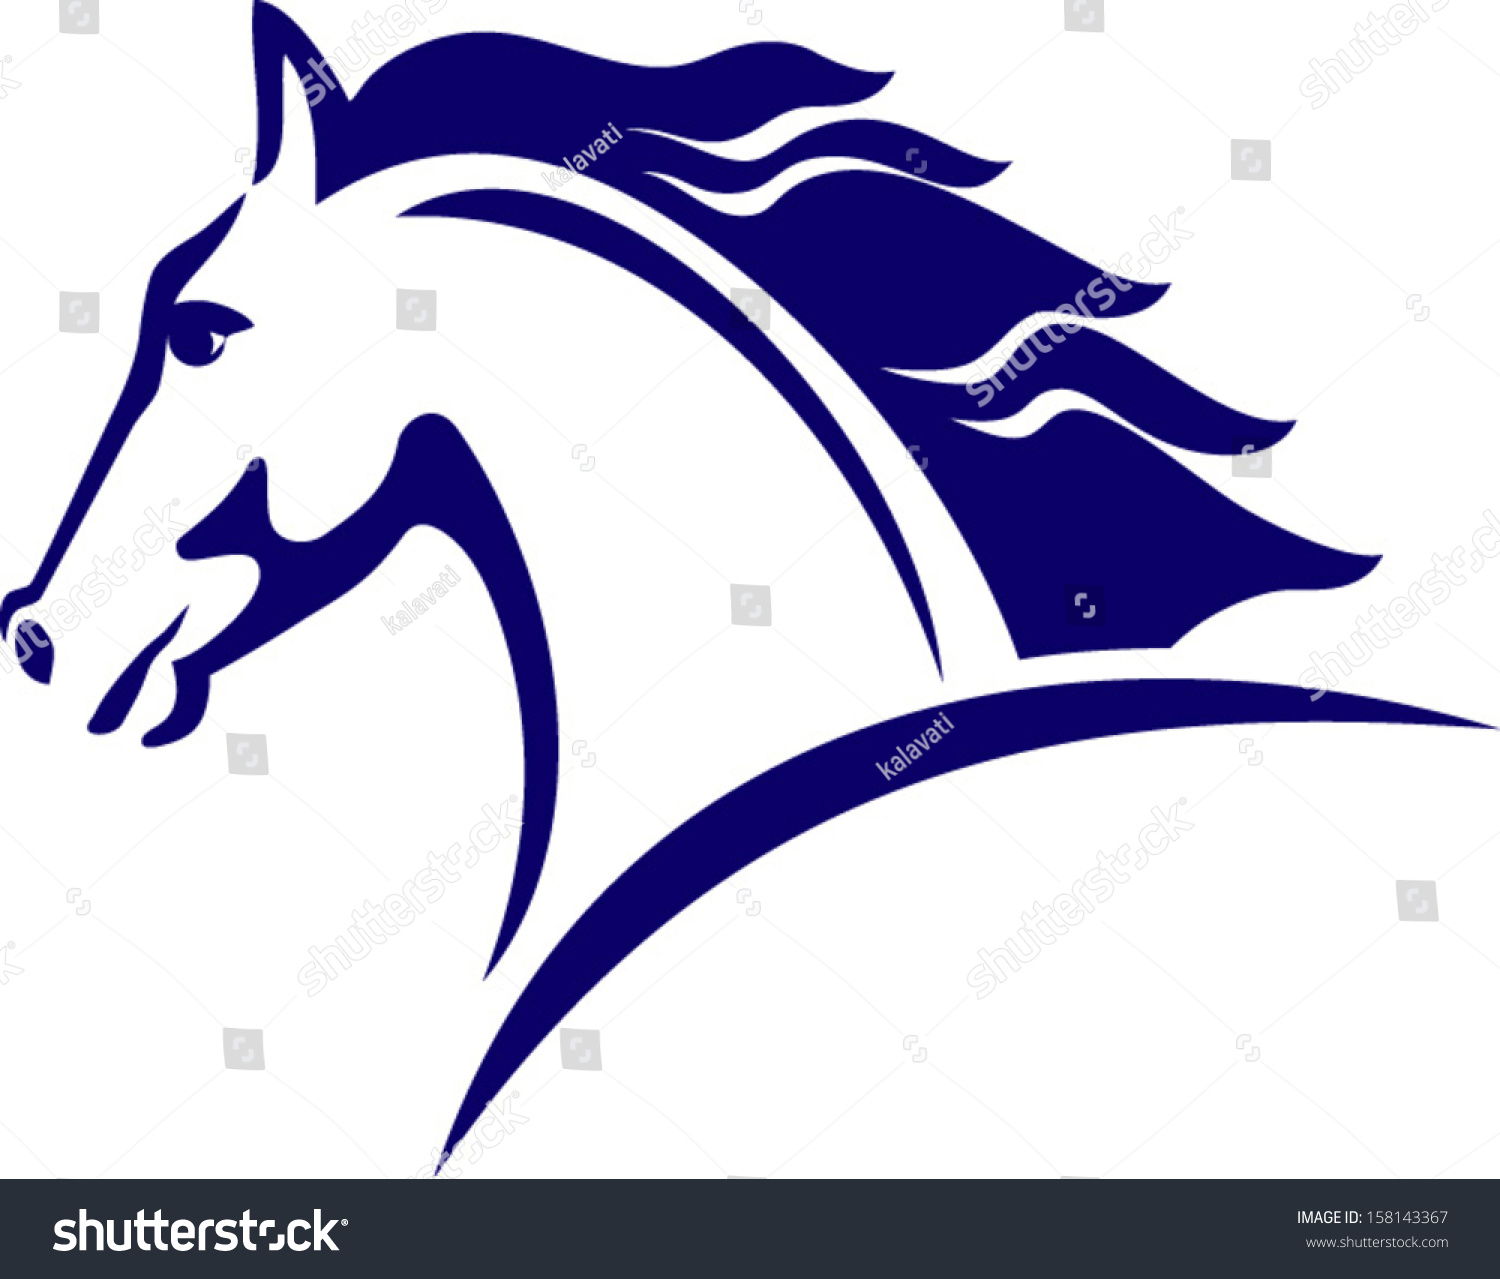 horse logo clipart - photo #38